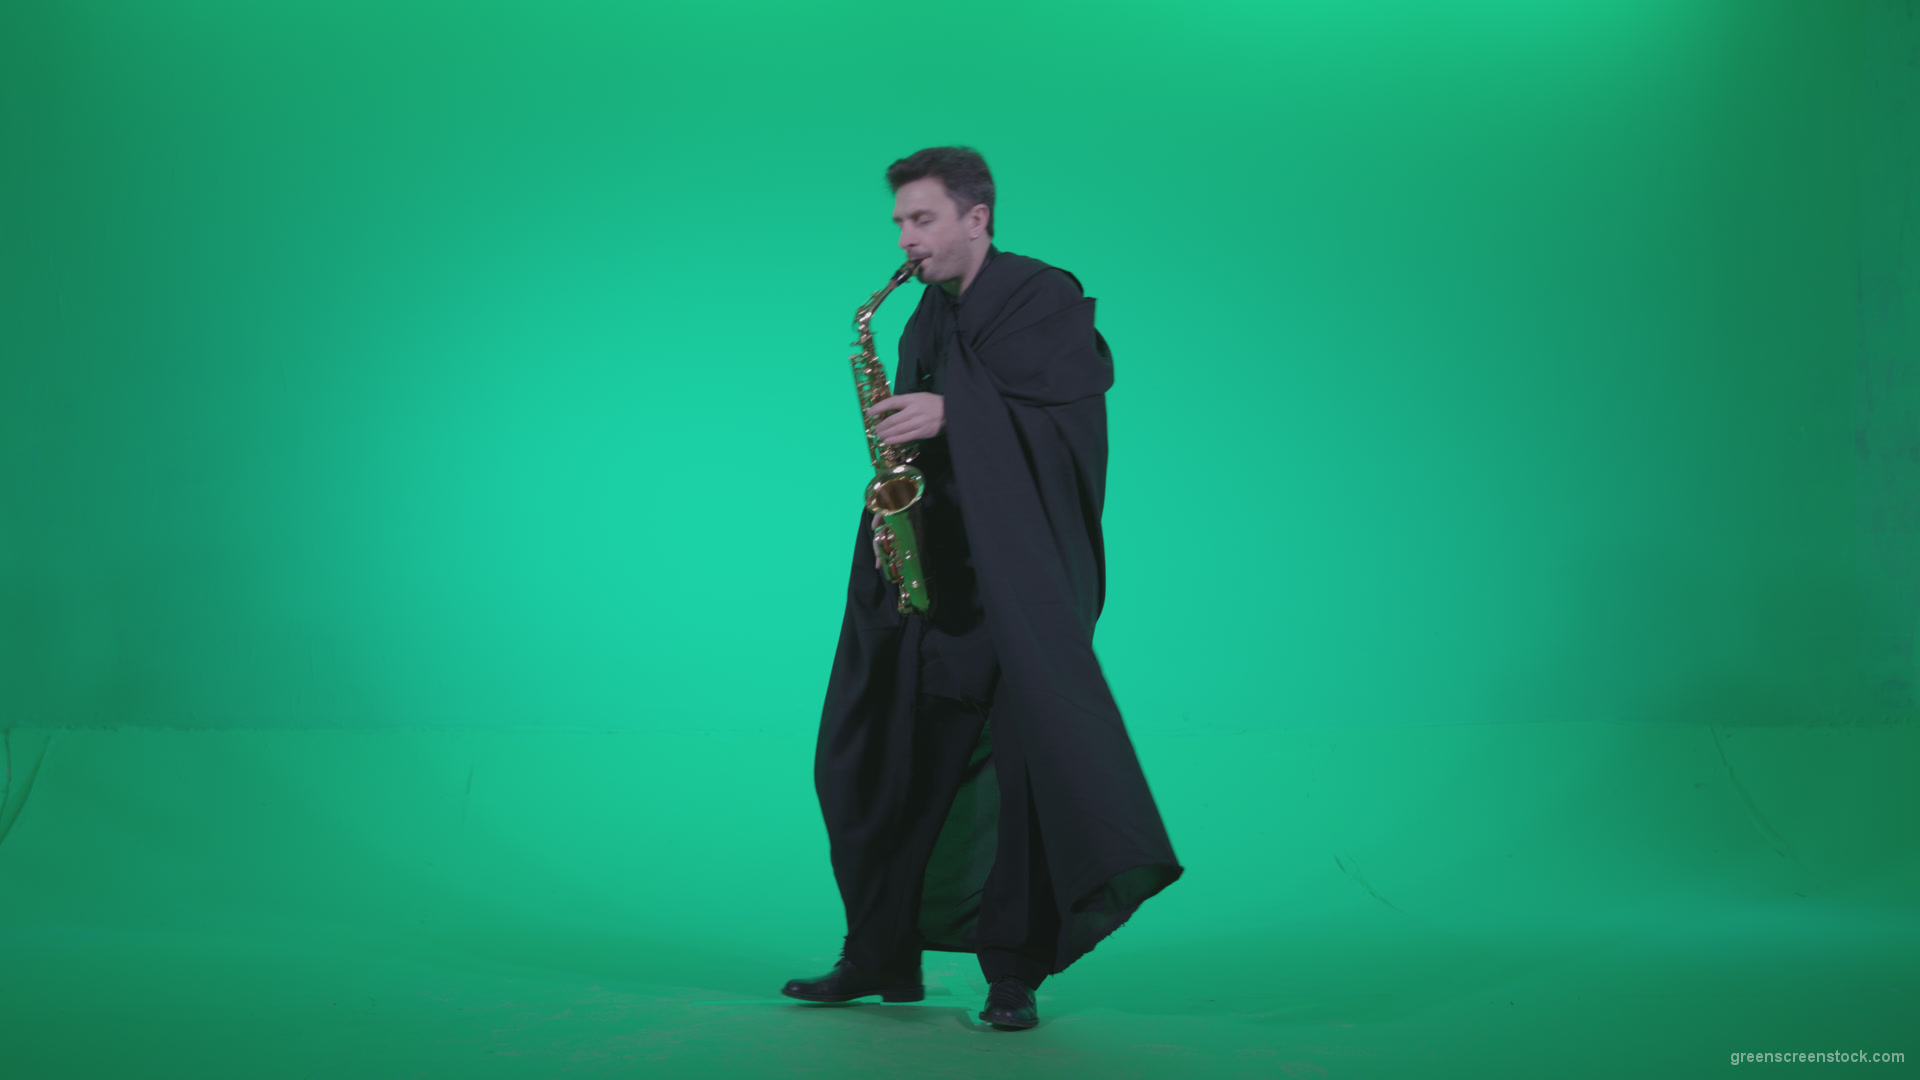 Gothic-Saxophone-Virtuoso-Performer-s3_004 Green Screen Stock